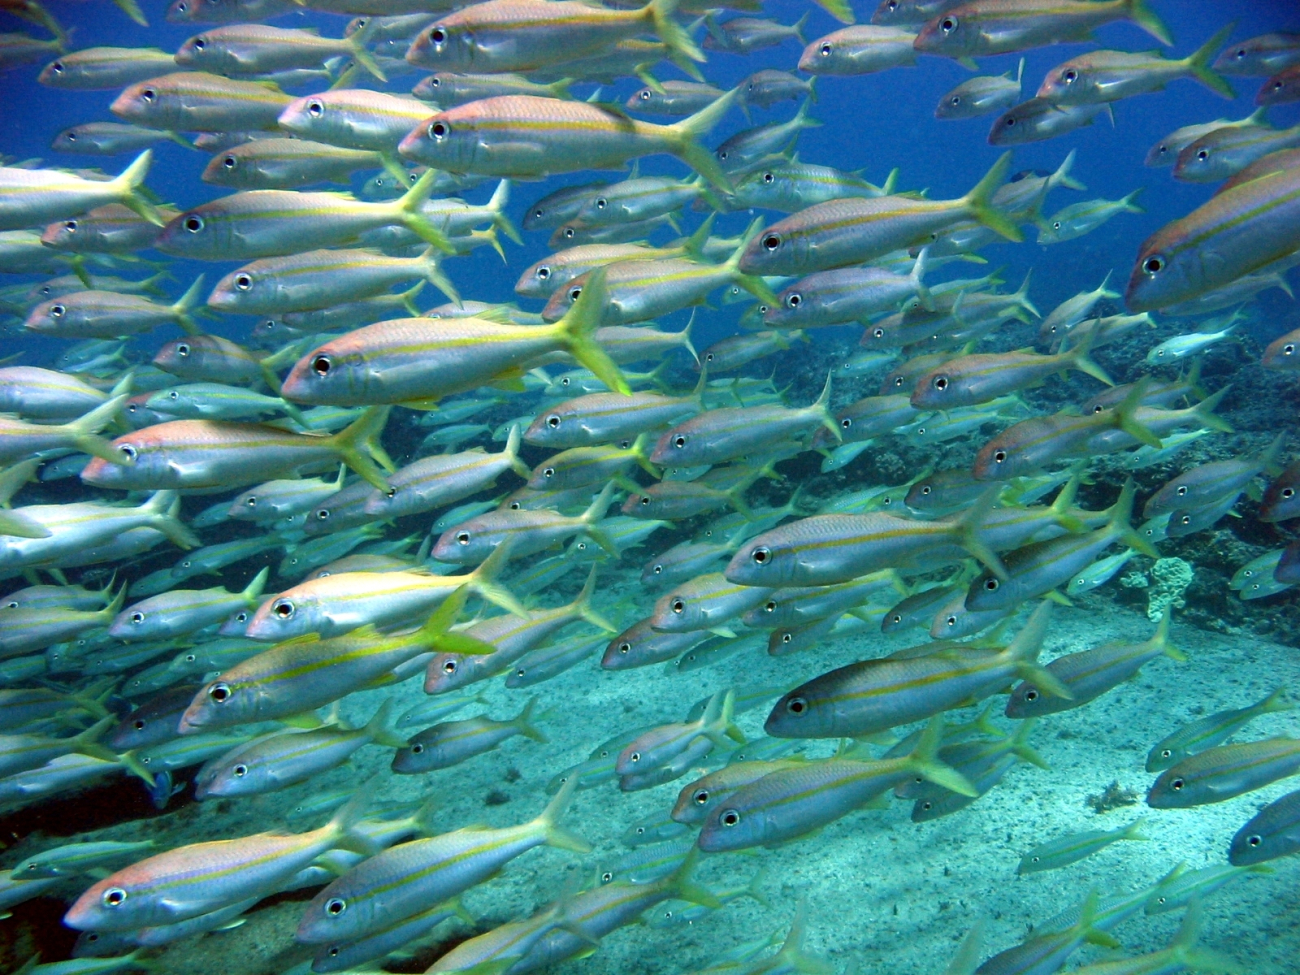 A school of yellow-tailed goatfish (Mulloidichthys flavolineatus)